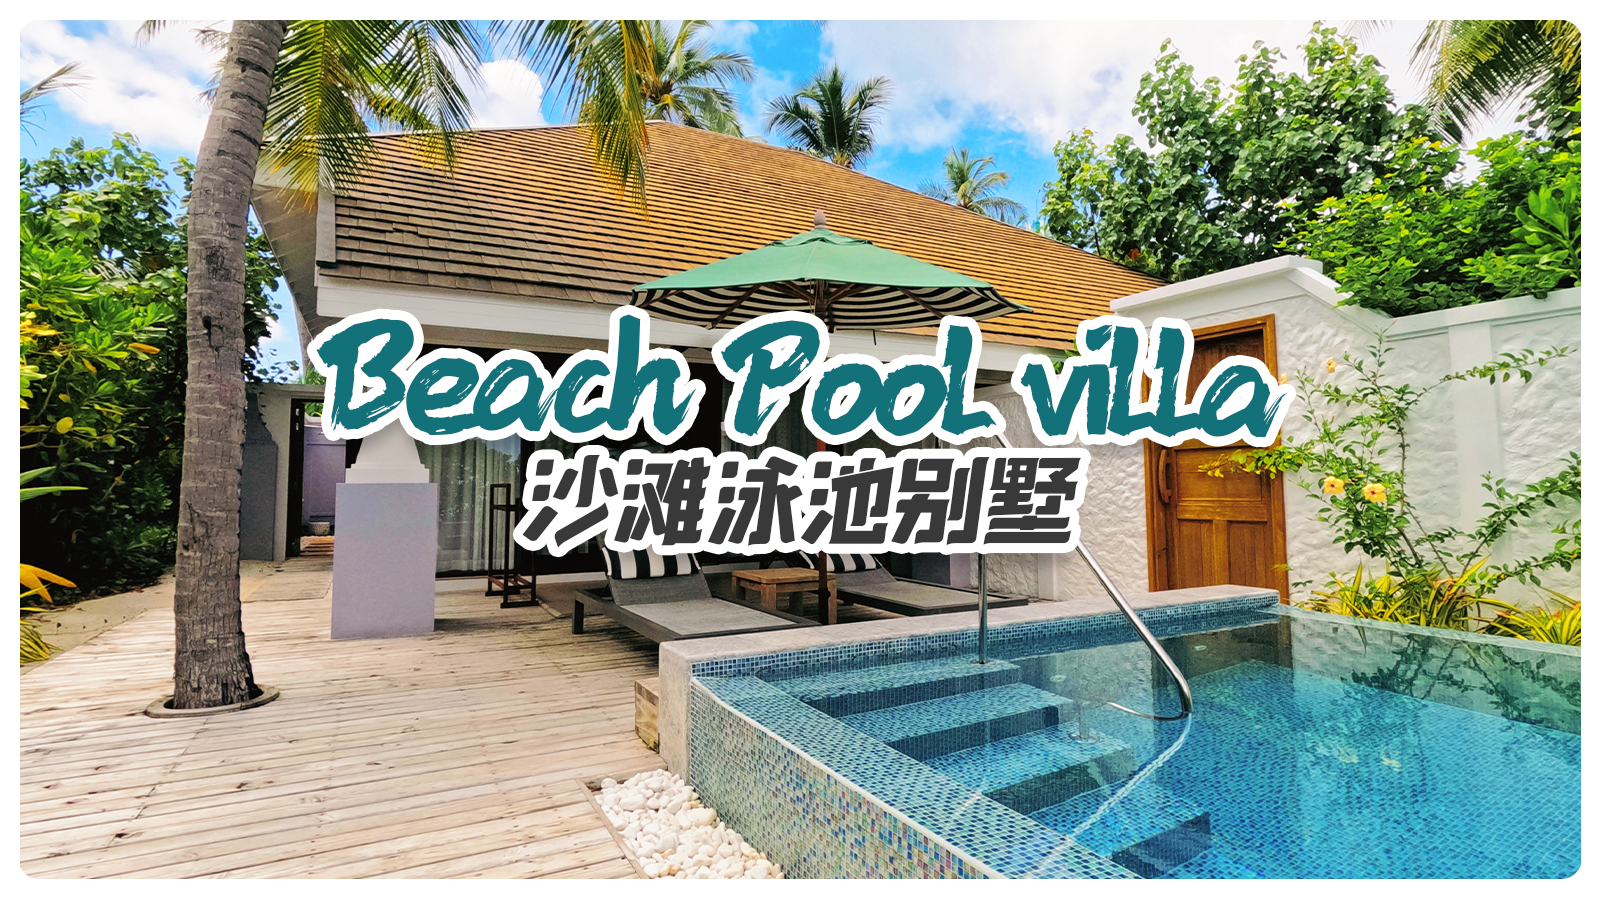 Beach Pool villa